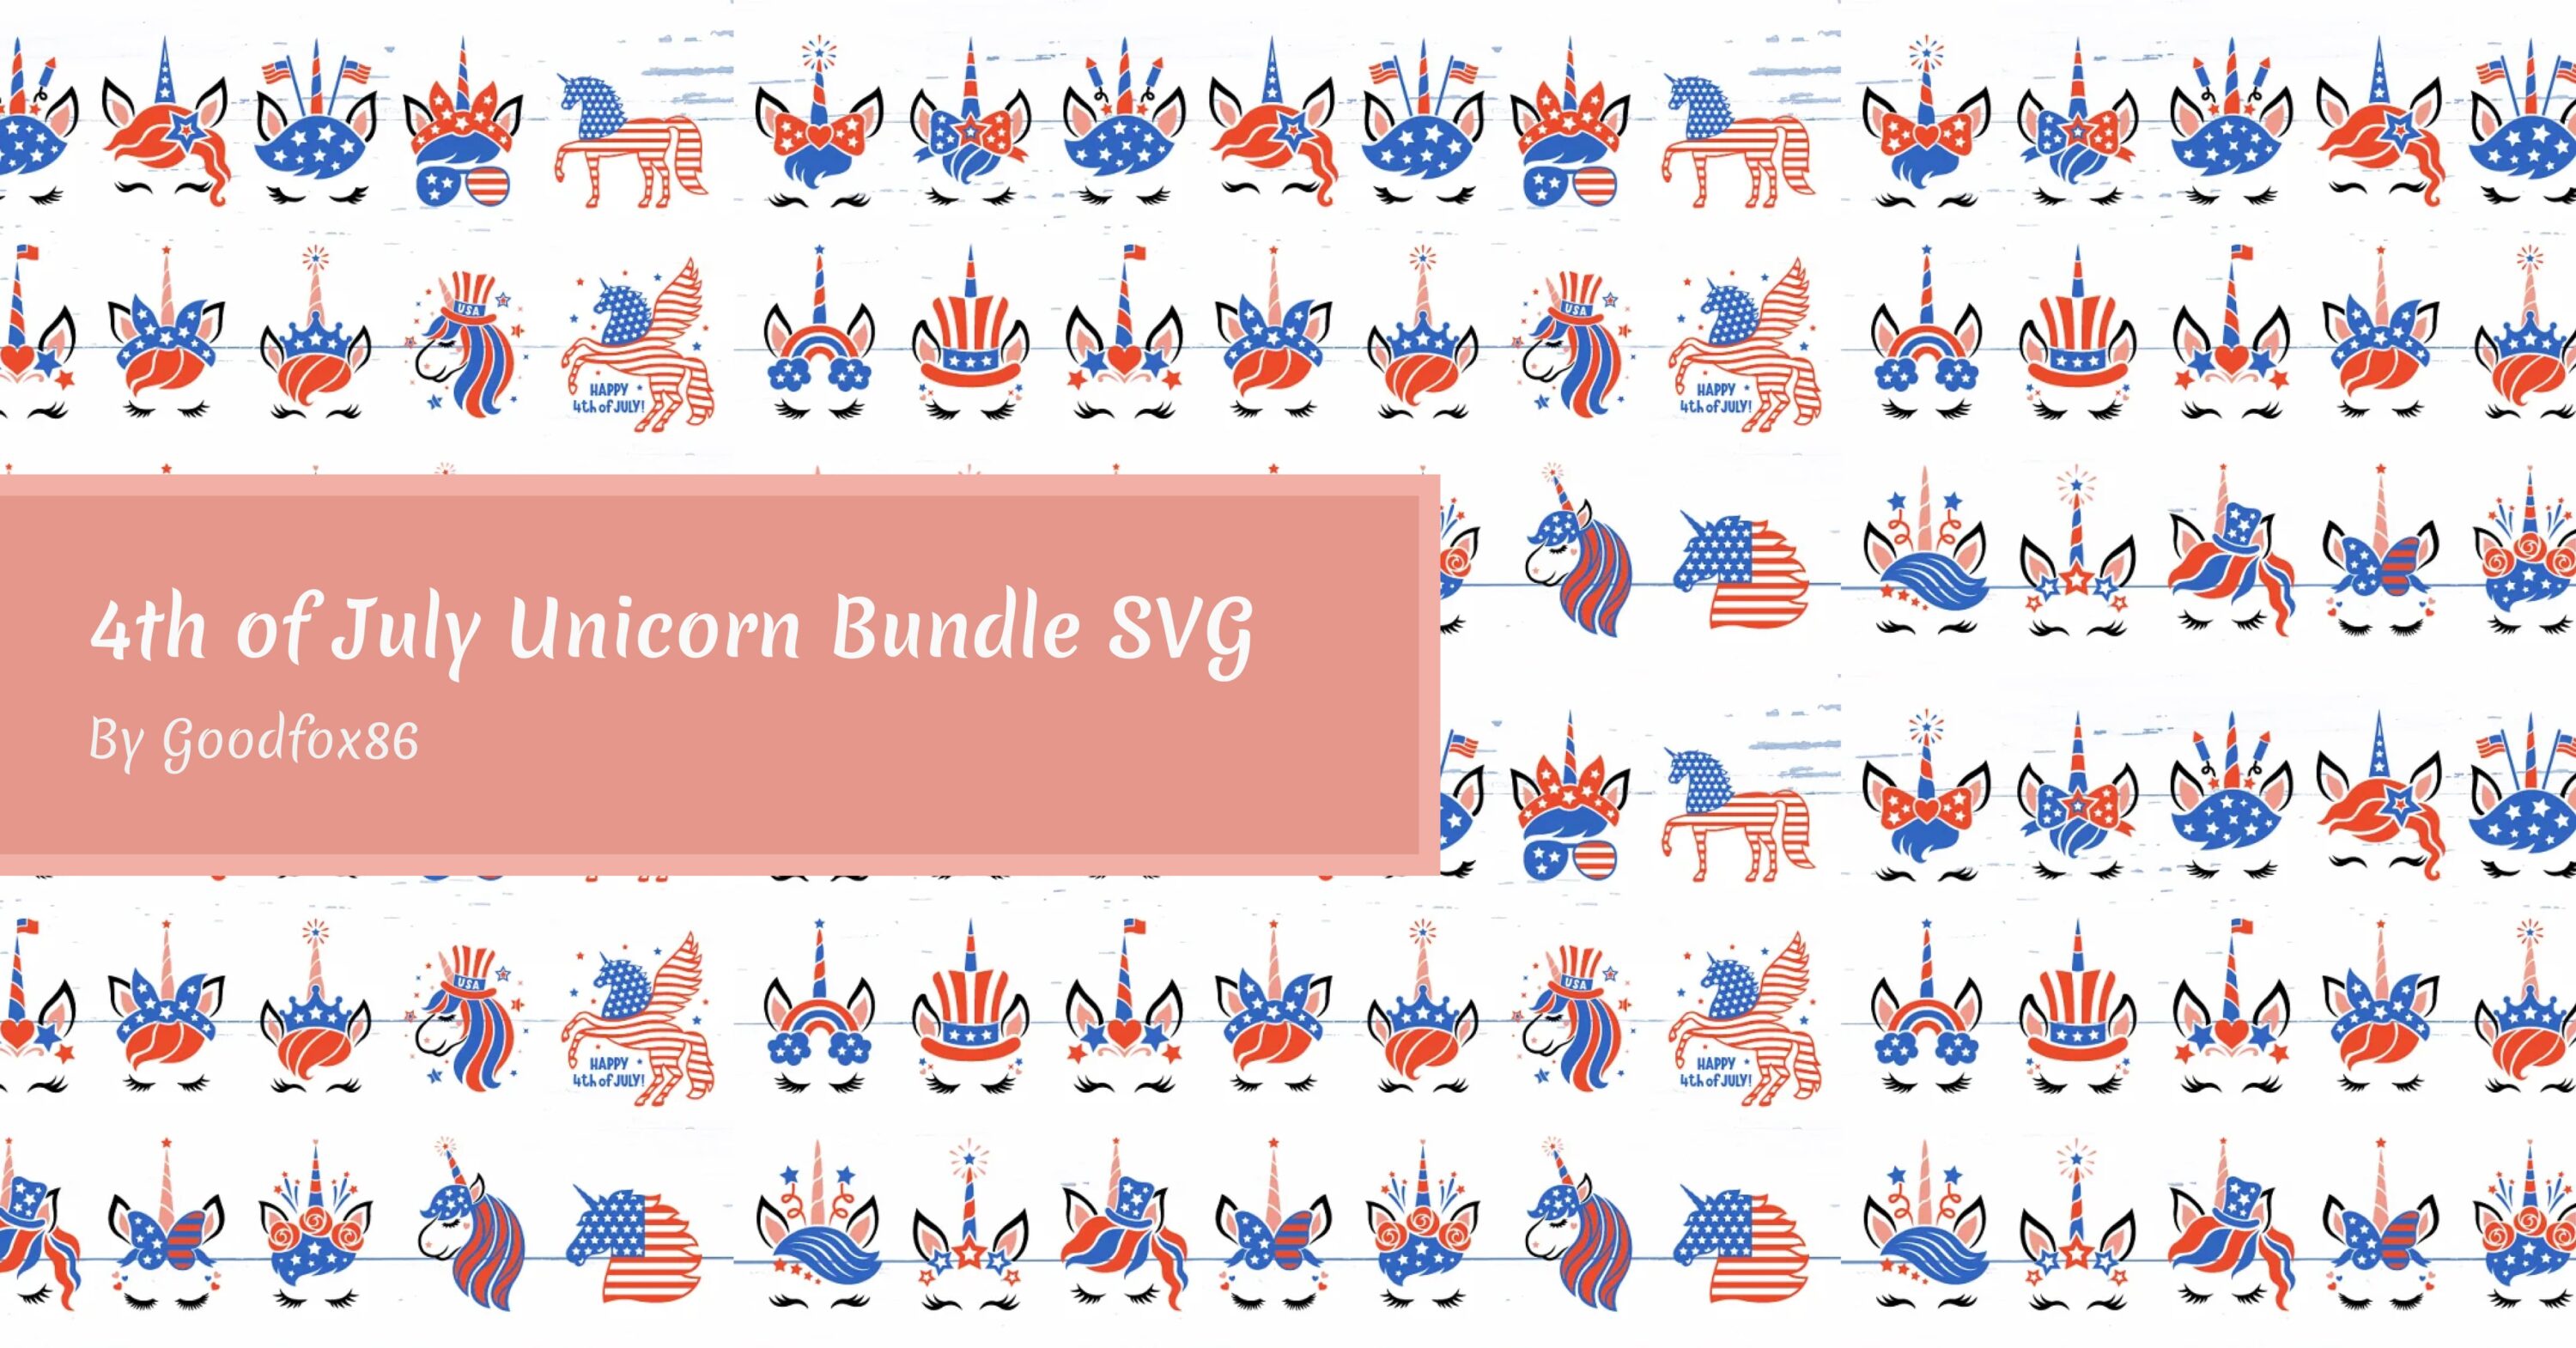 4th of July Unicorn Bundle SVG facebook image.